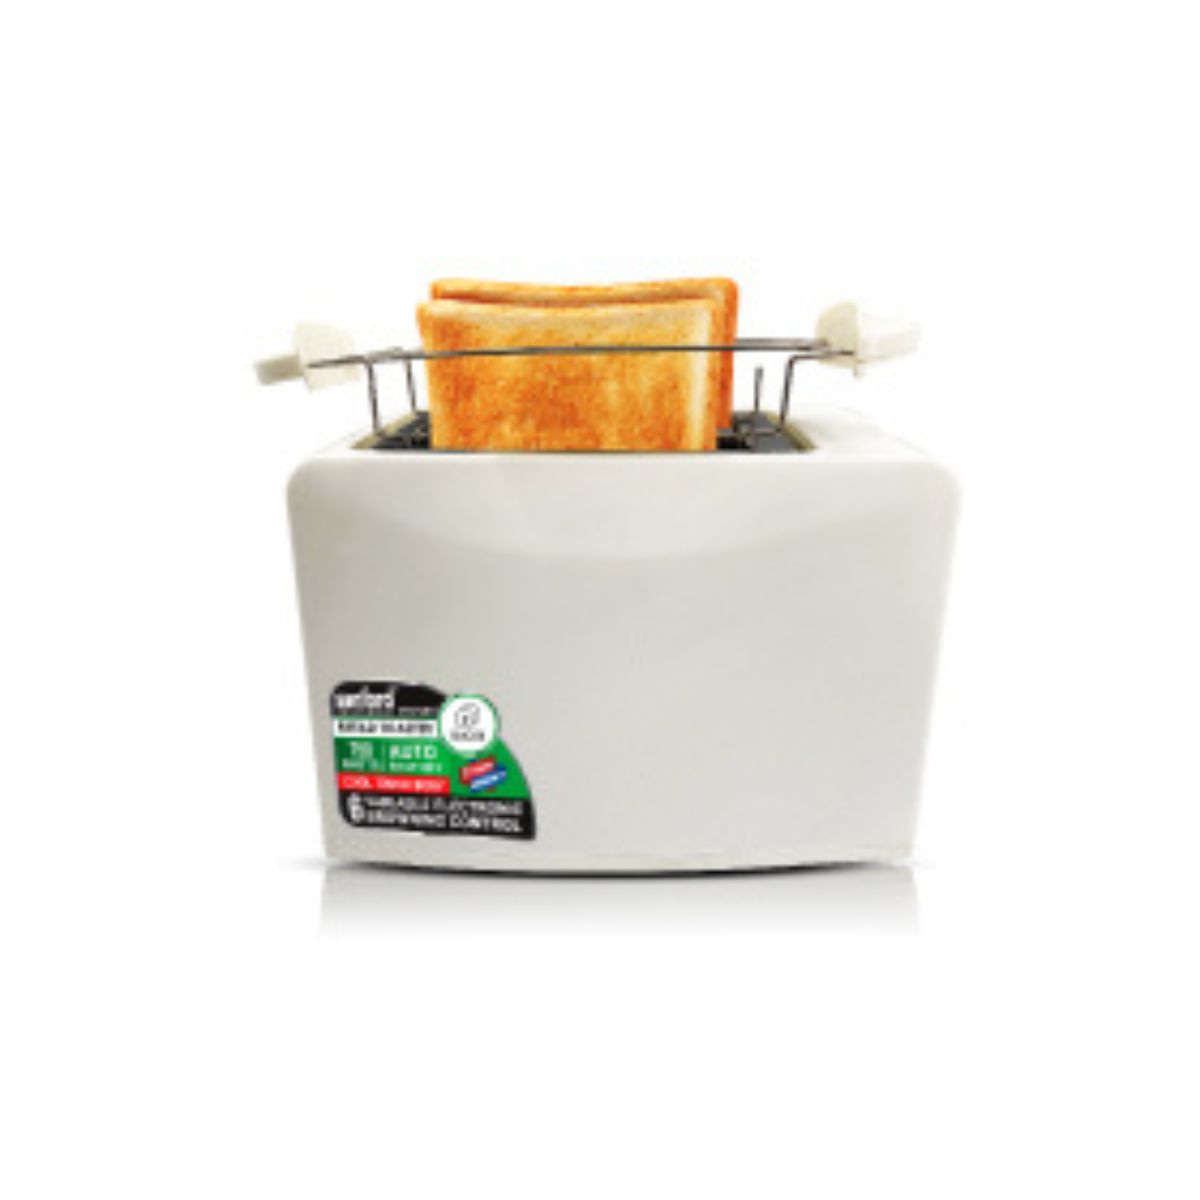 Sanford Bread Toaster - SF5753BT - White